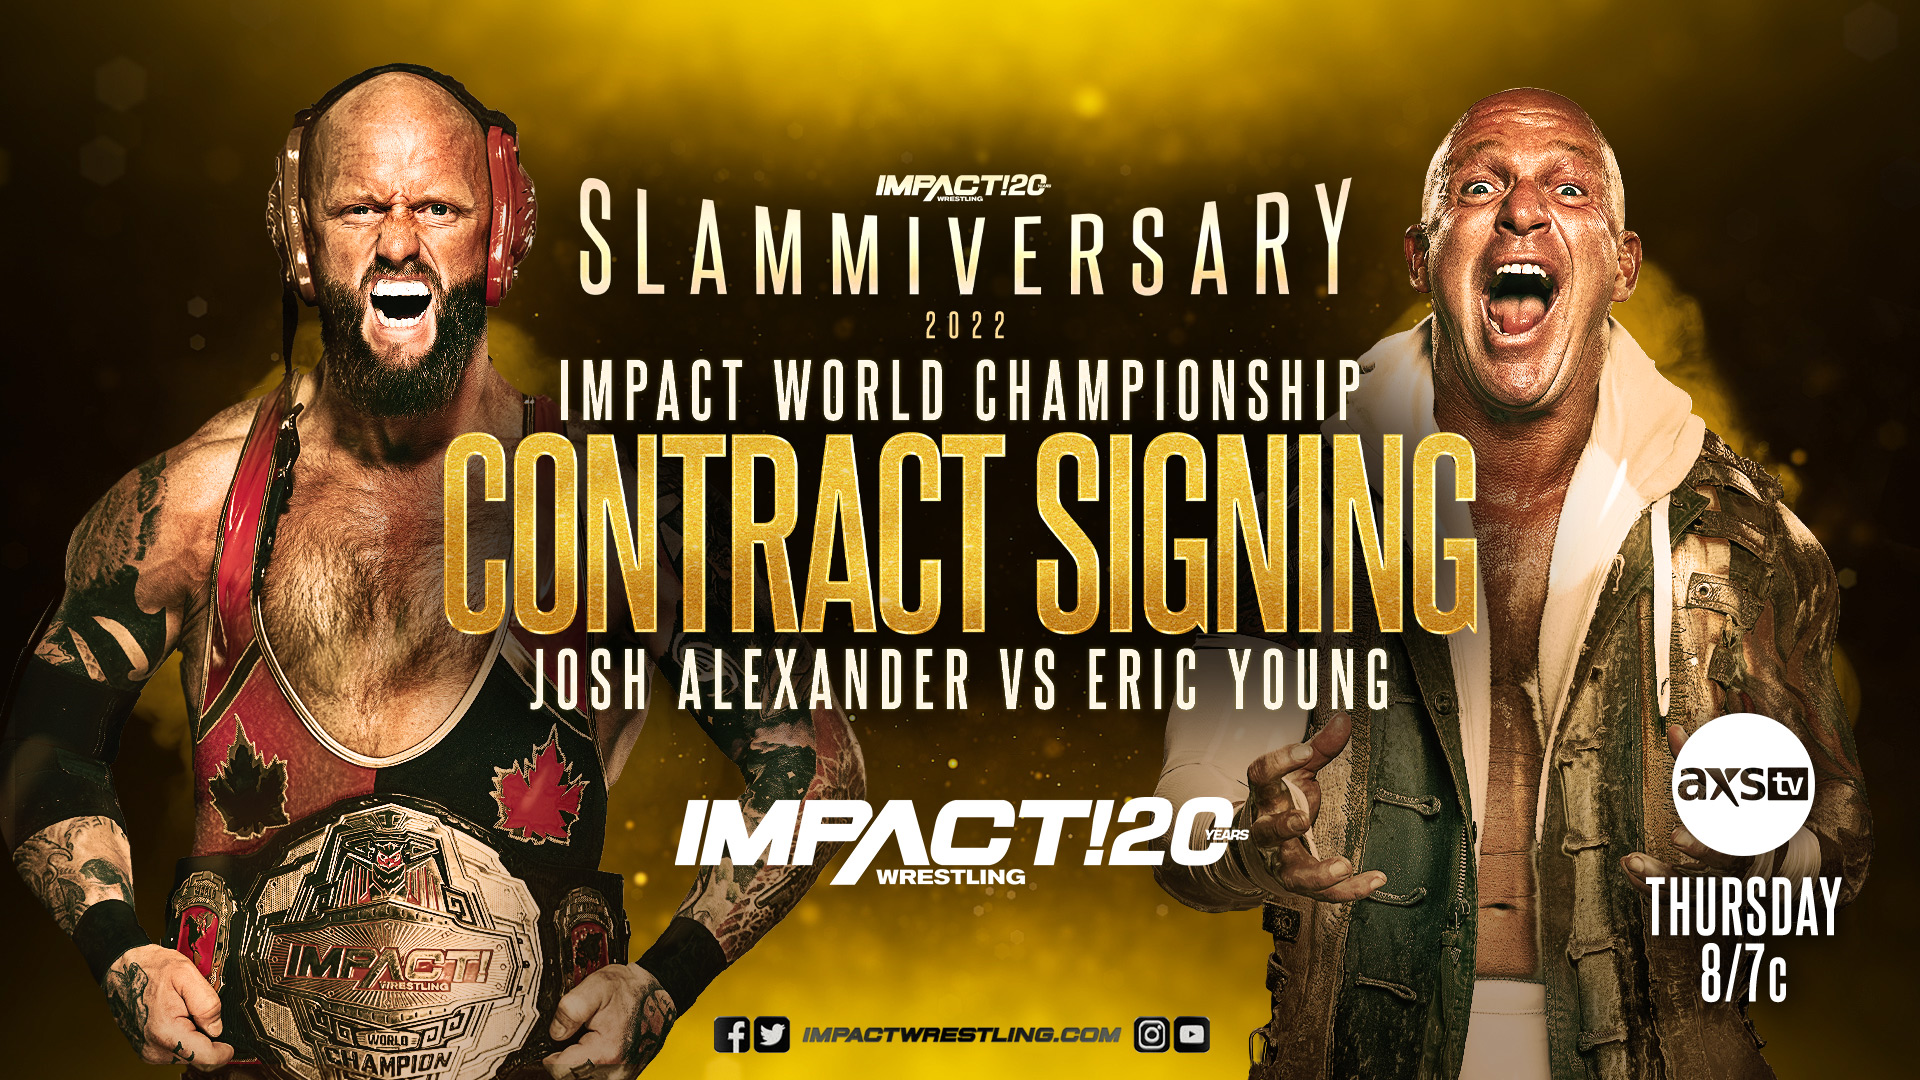 Josh-Alexander-vs-Eric-Young-Contract-Signing-1.jpg